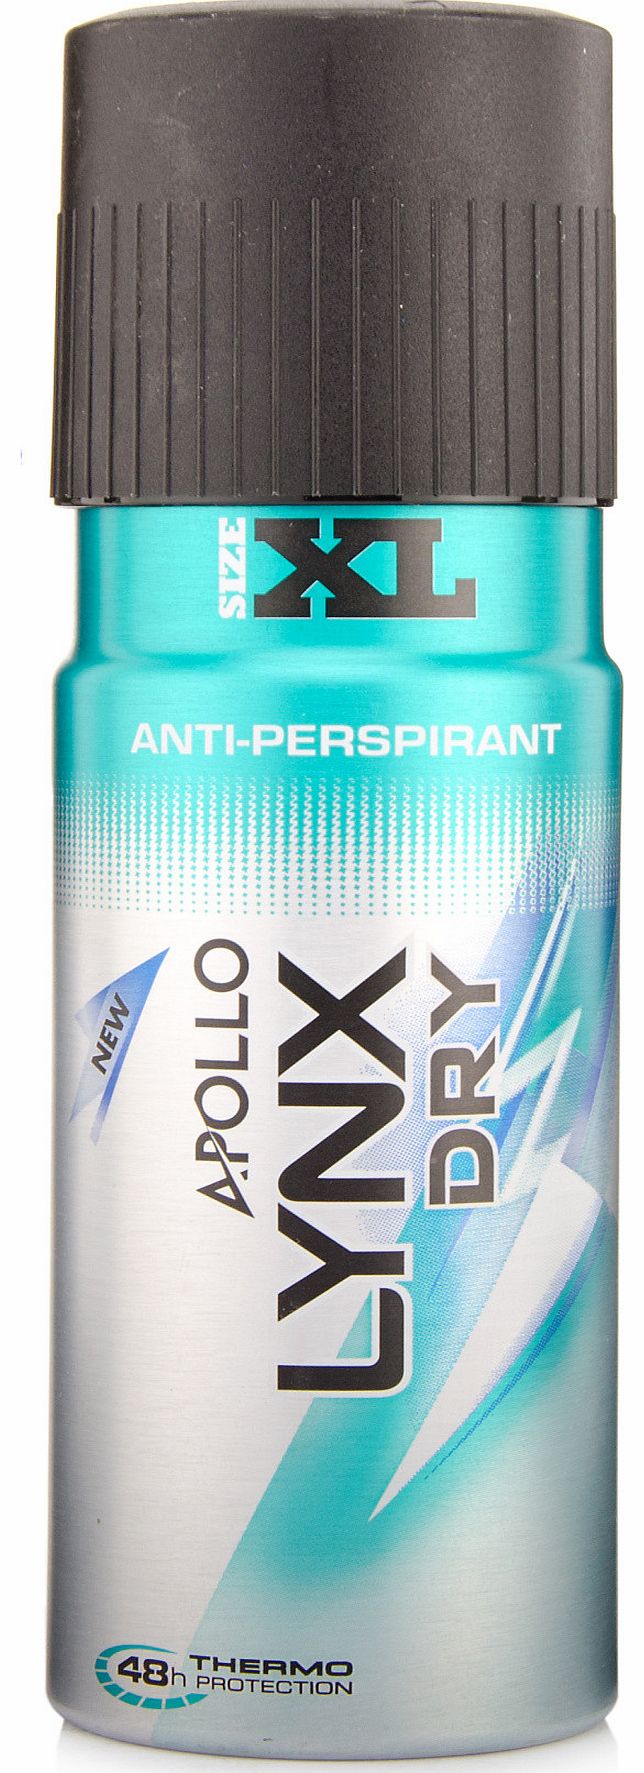 Dry XL Apollo Anti-Perspirant Deodorant